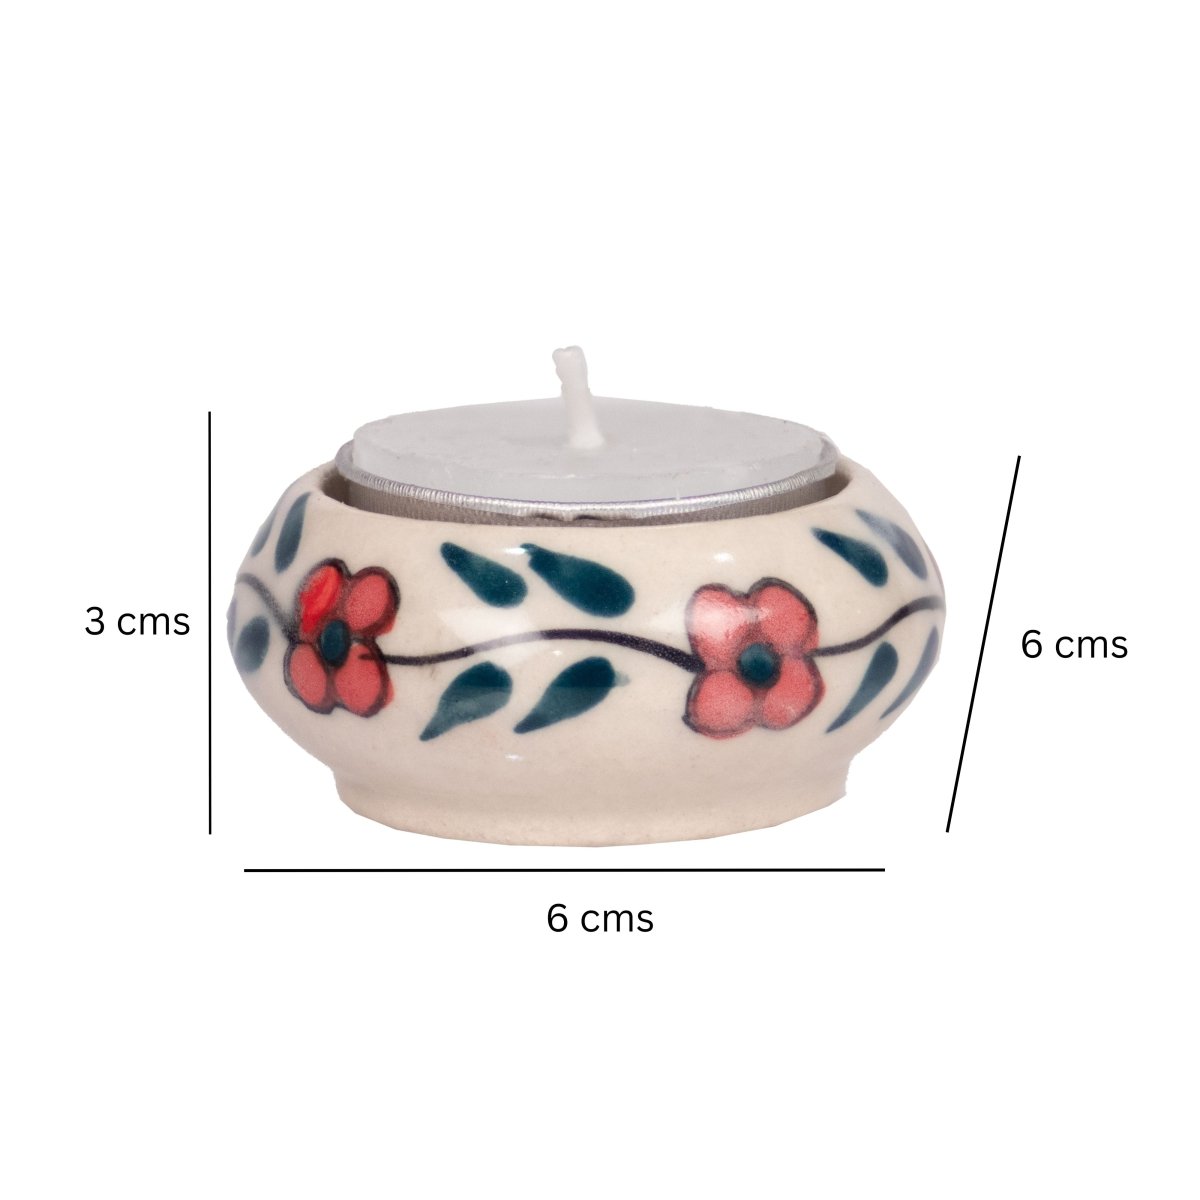 Kezevel Ceramic T-Light Candle Holder - Set of 6 Handcrafted Reusable Ceramic Candle Holder with Candle for Home Decor, Festive Decor, Size 6X6X3 CM - Kezevel